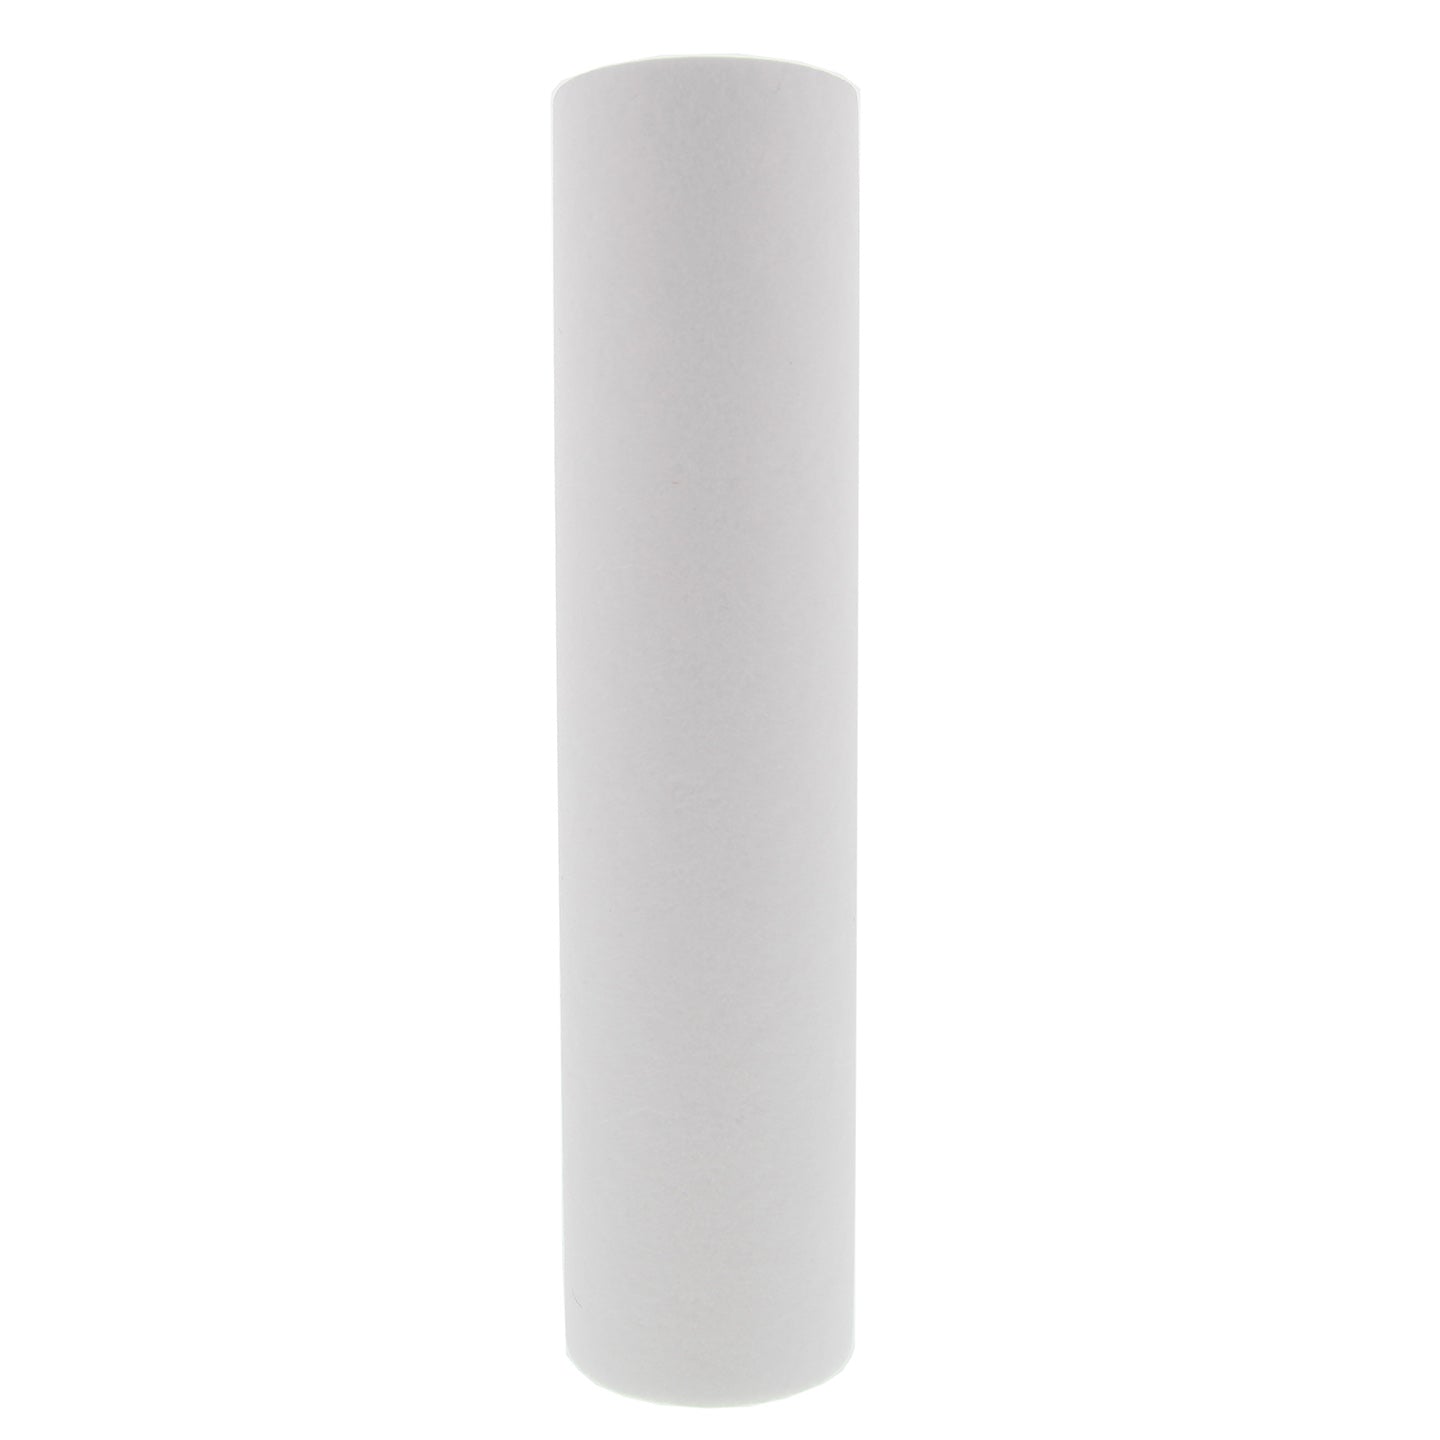 Pentek P5 Sediment Water Filter (9-3/4-inch x 2-3/8-inch) (Front No Label)